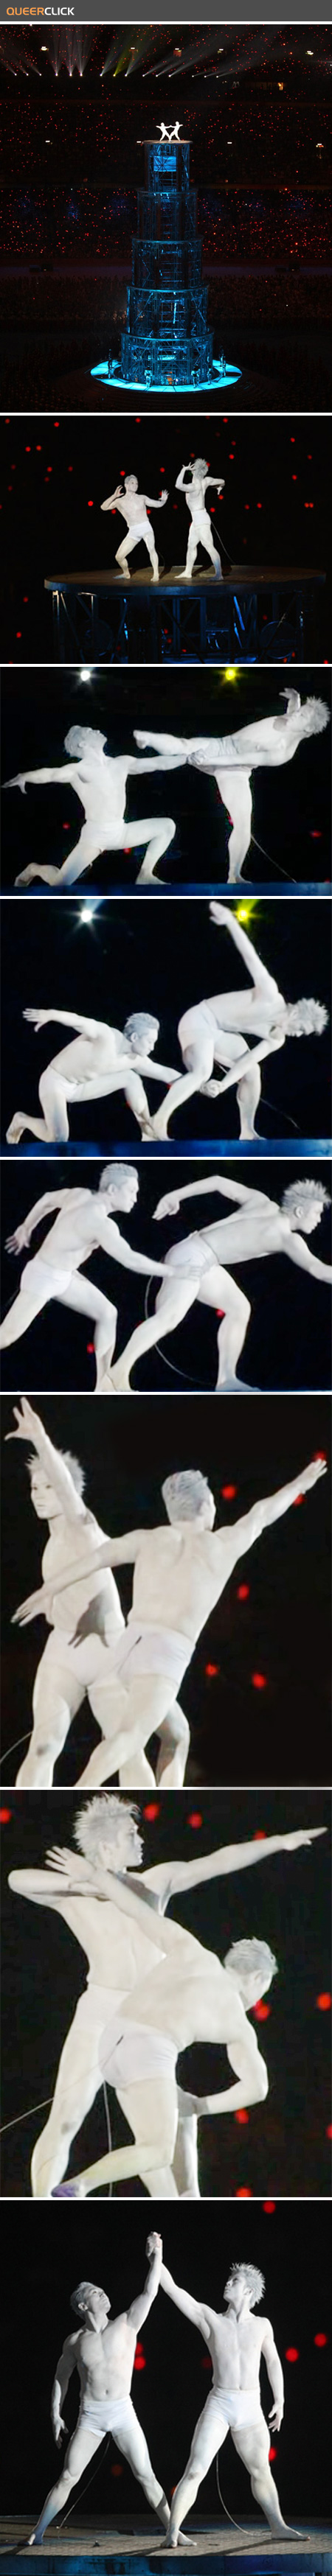 white-painted_beijing_olympics_closing_ceremony.jpg